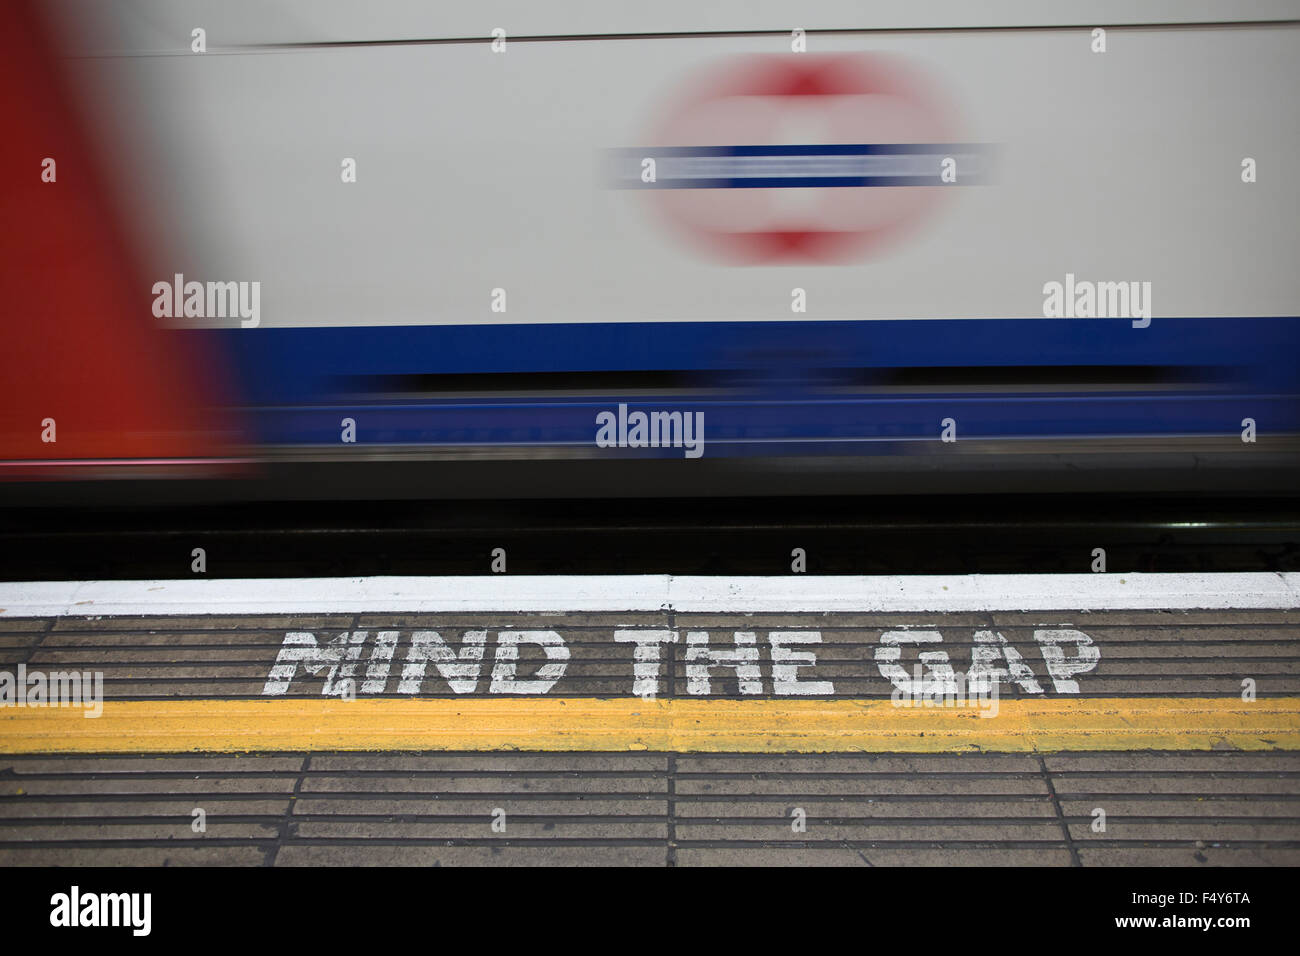 MIND THE GAP visual warning issued to rail passengers alongside the London Underground track, London, UK Stock Photo